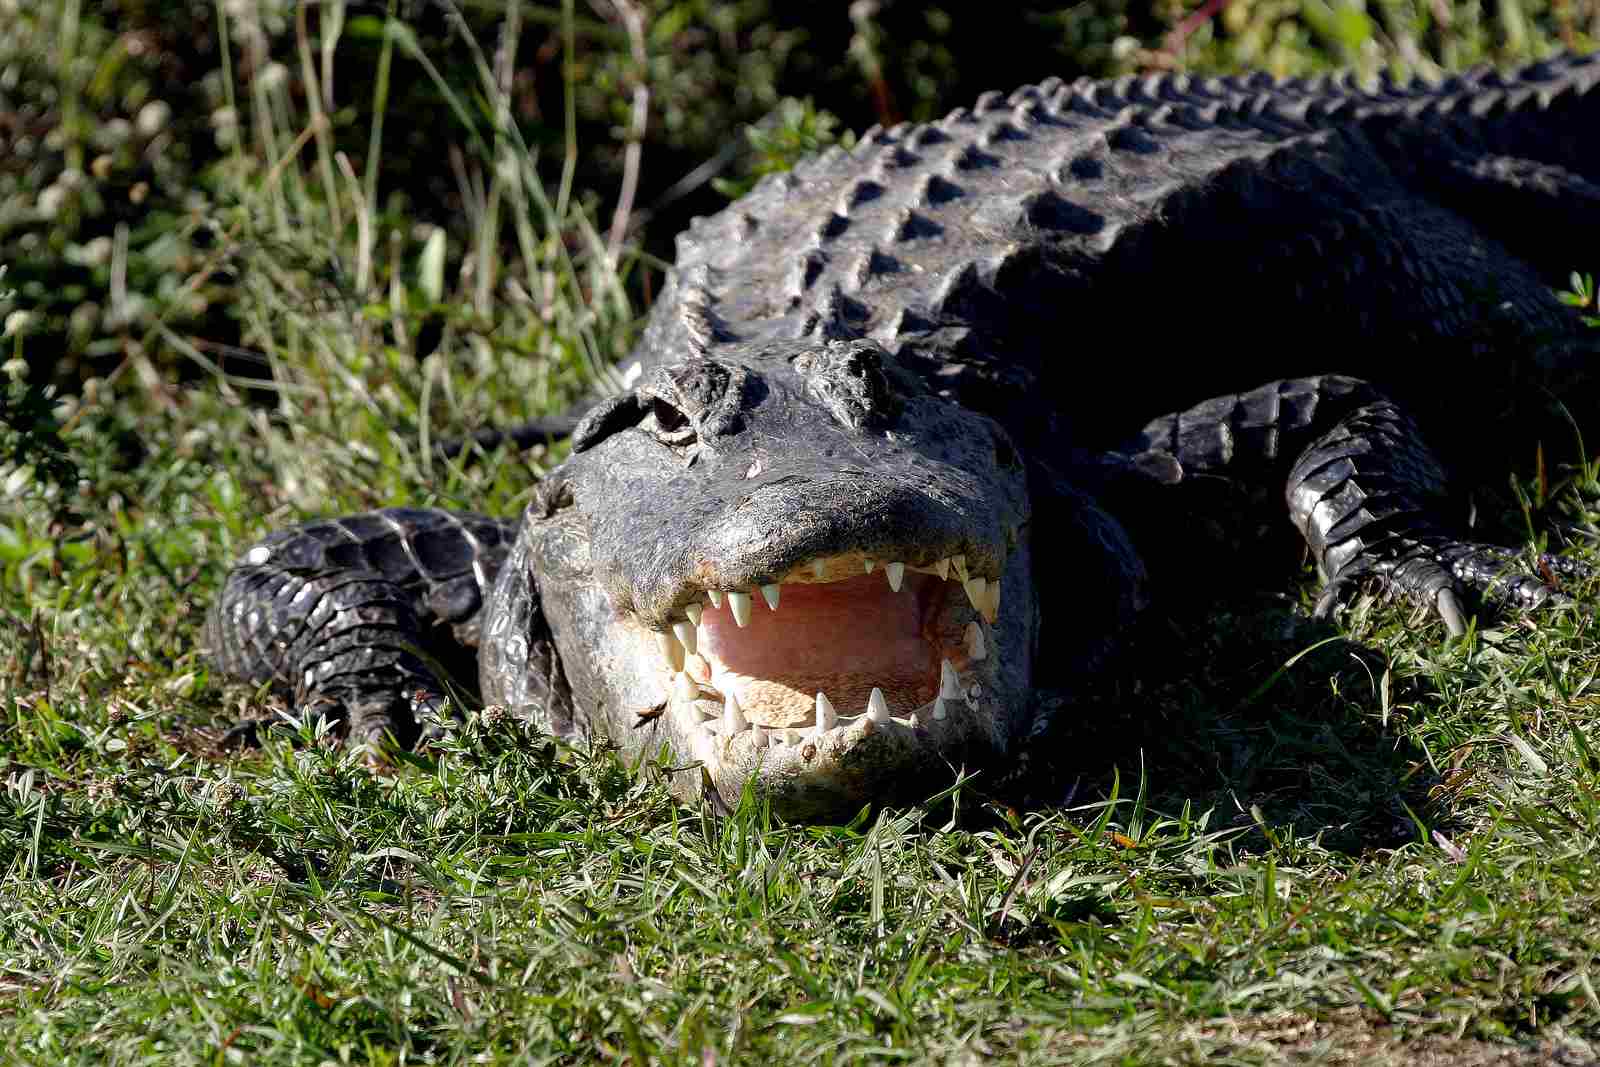 Chinese alligator vs american alligator